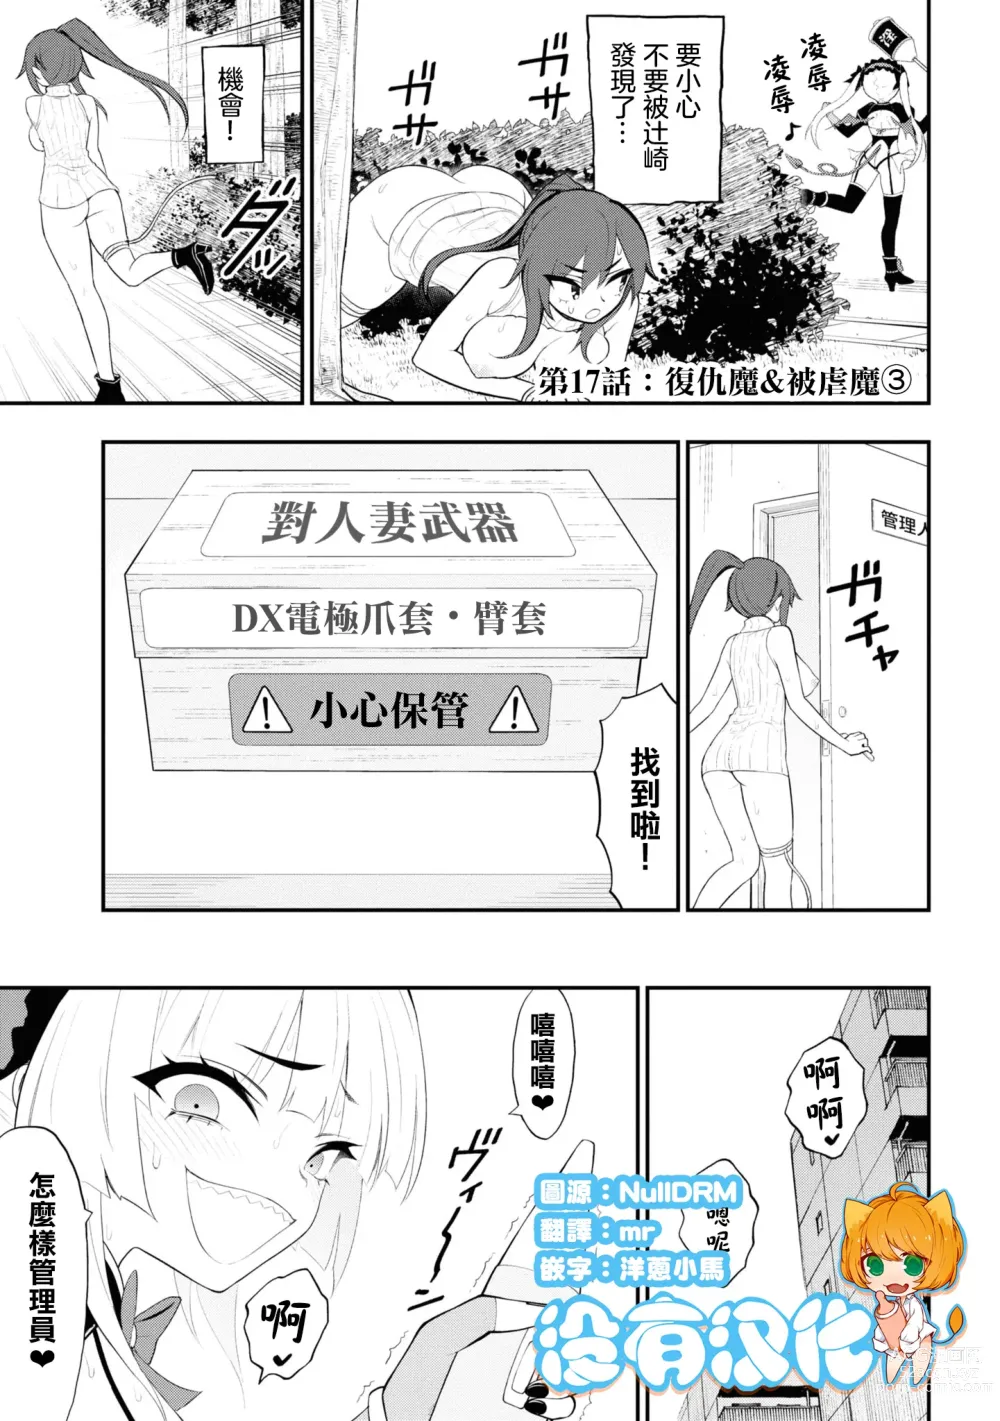 Page 44 of manga 淫獄小區 15-17話